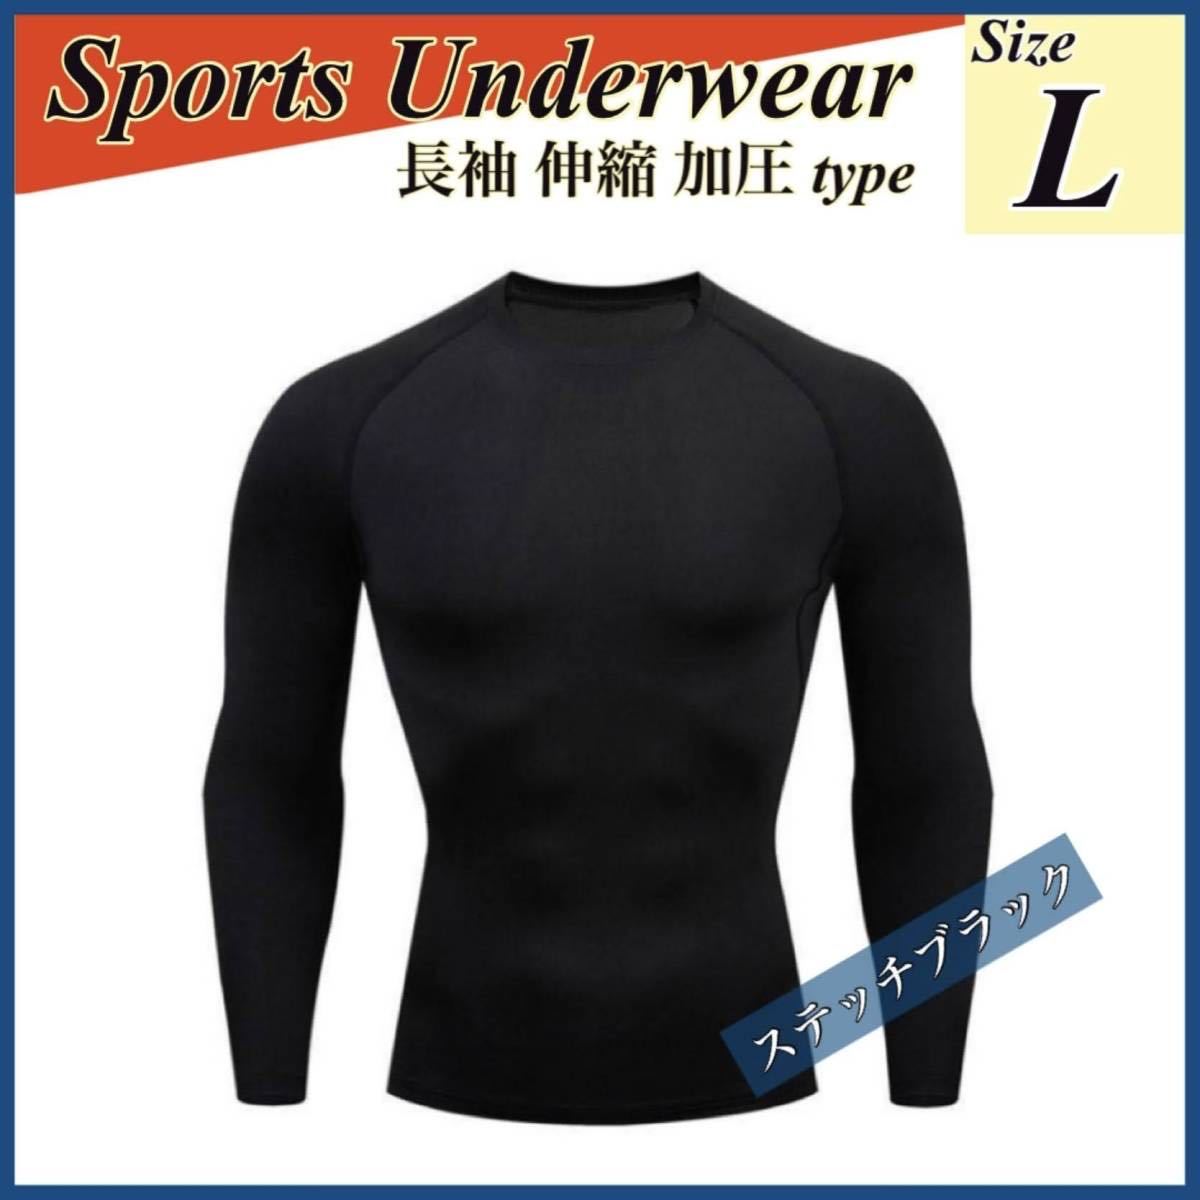 L UV cut under wear black sport inner long sleeve speed .spf50 all season black . sweat tennis soccer 